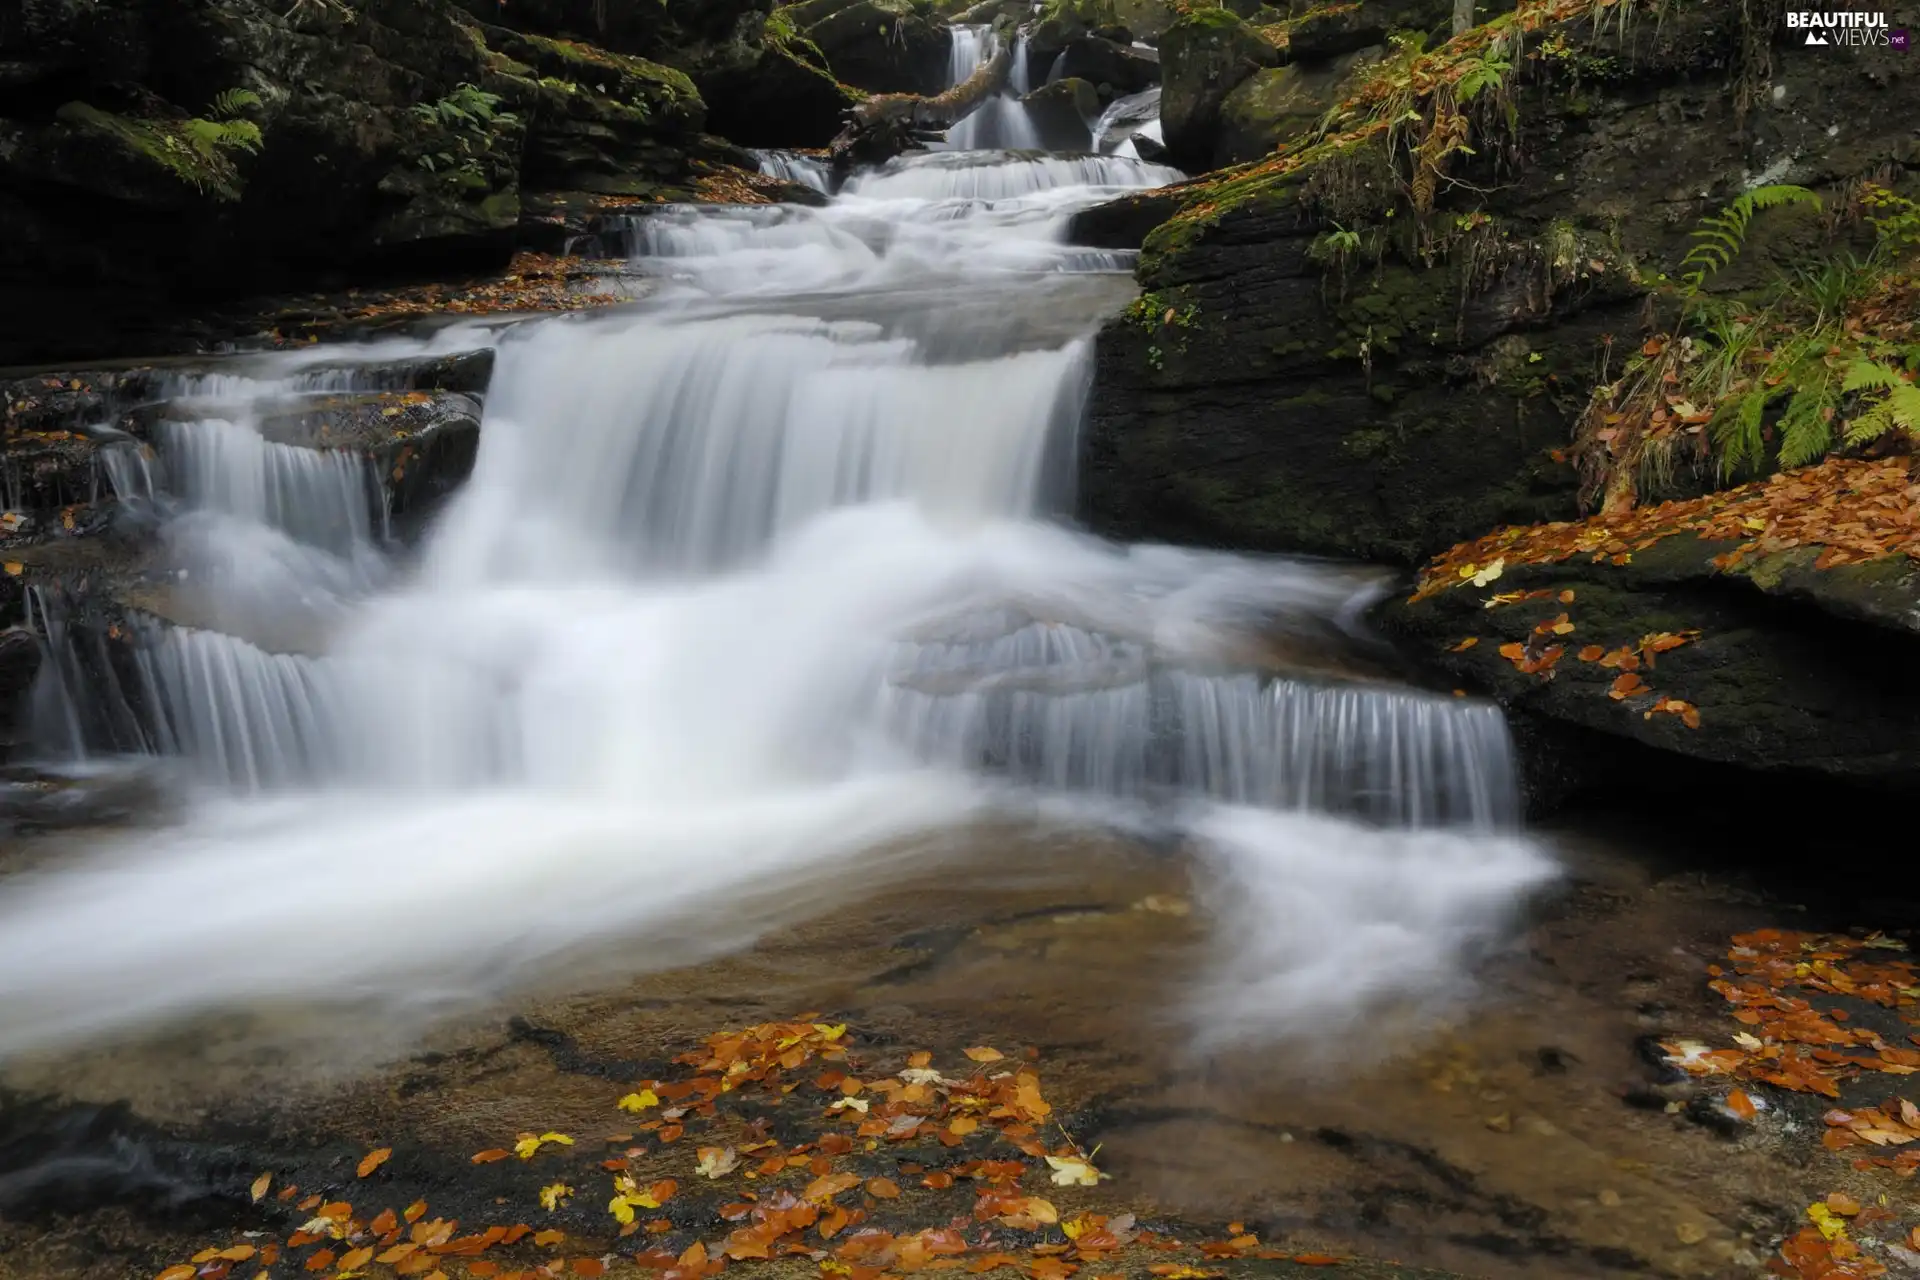 Leaf, waterfall, rocks